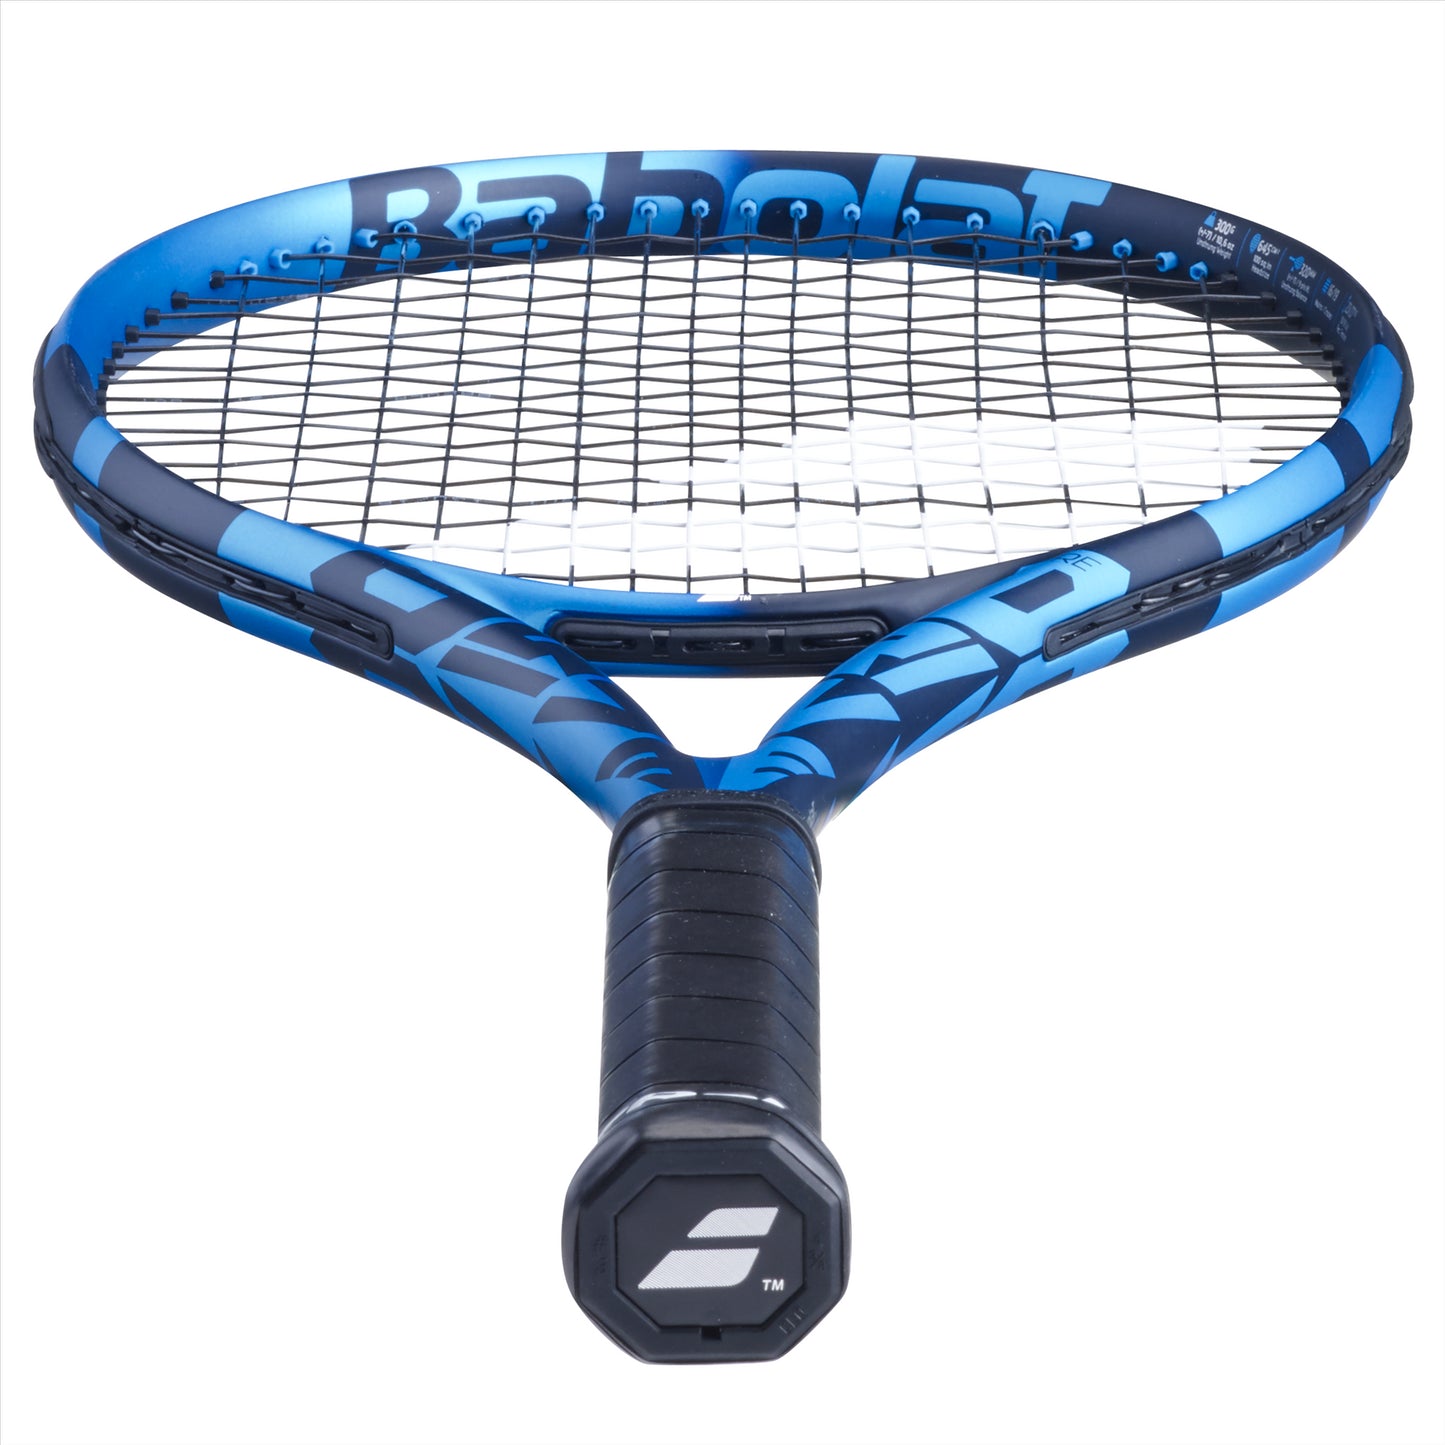 Babolat Pure Drive + Tennis Racket - Blue (Strung)